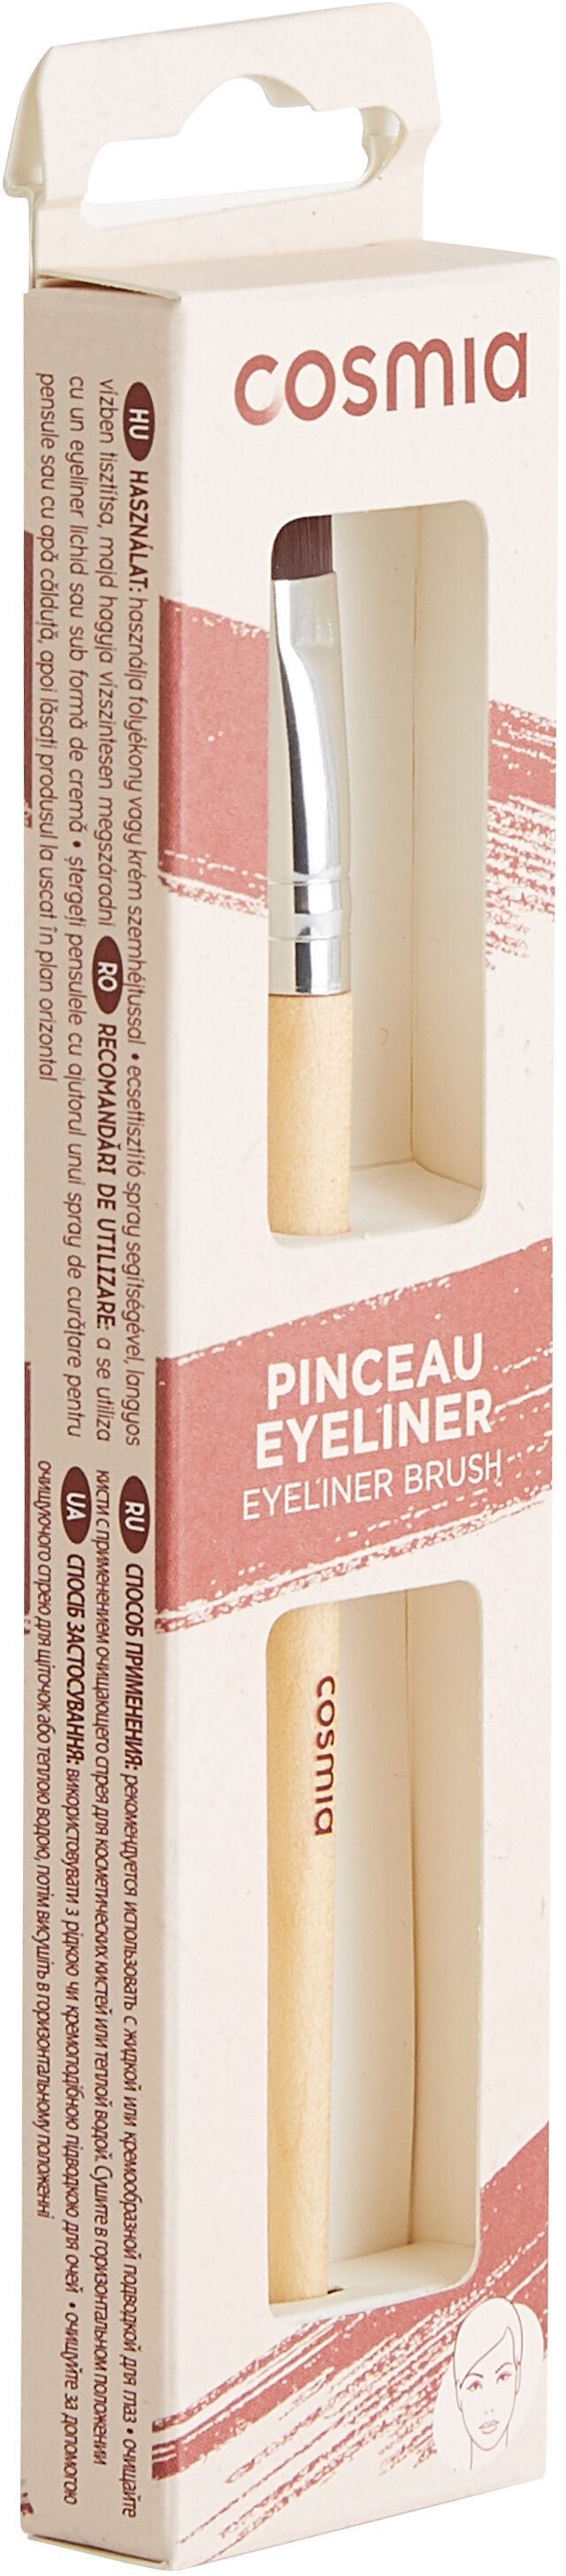 Pinceau eyeliner - Product - fr